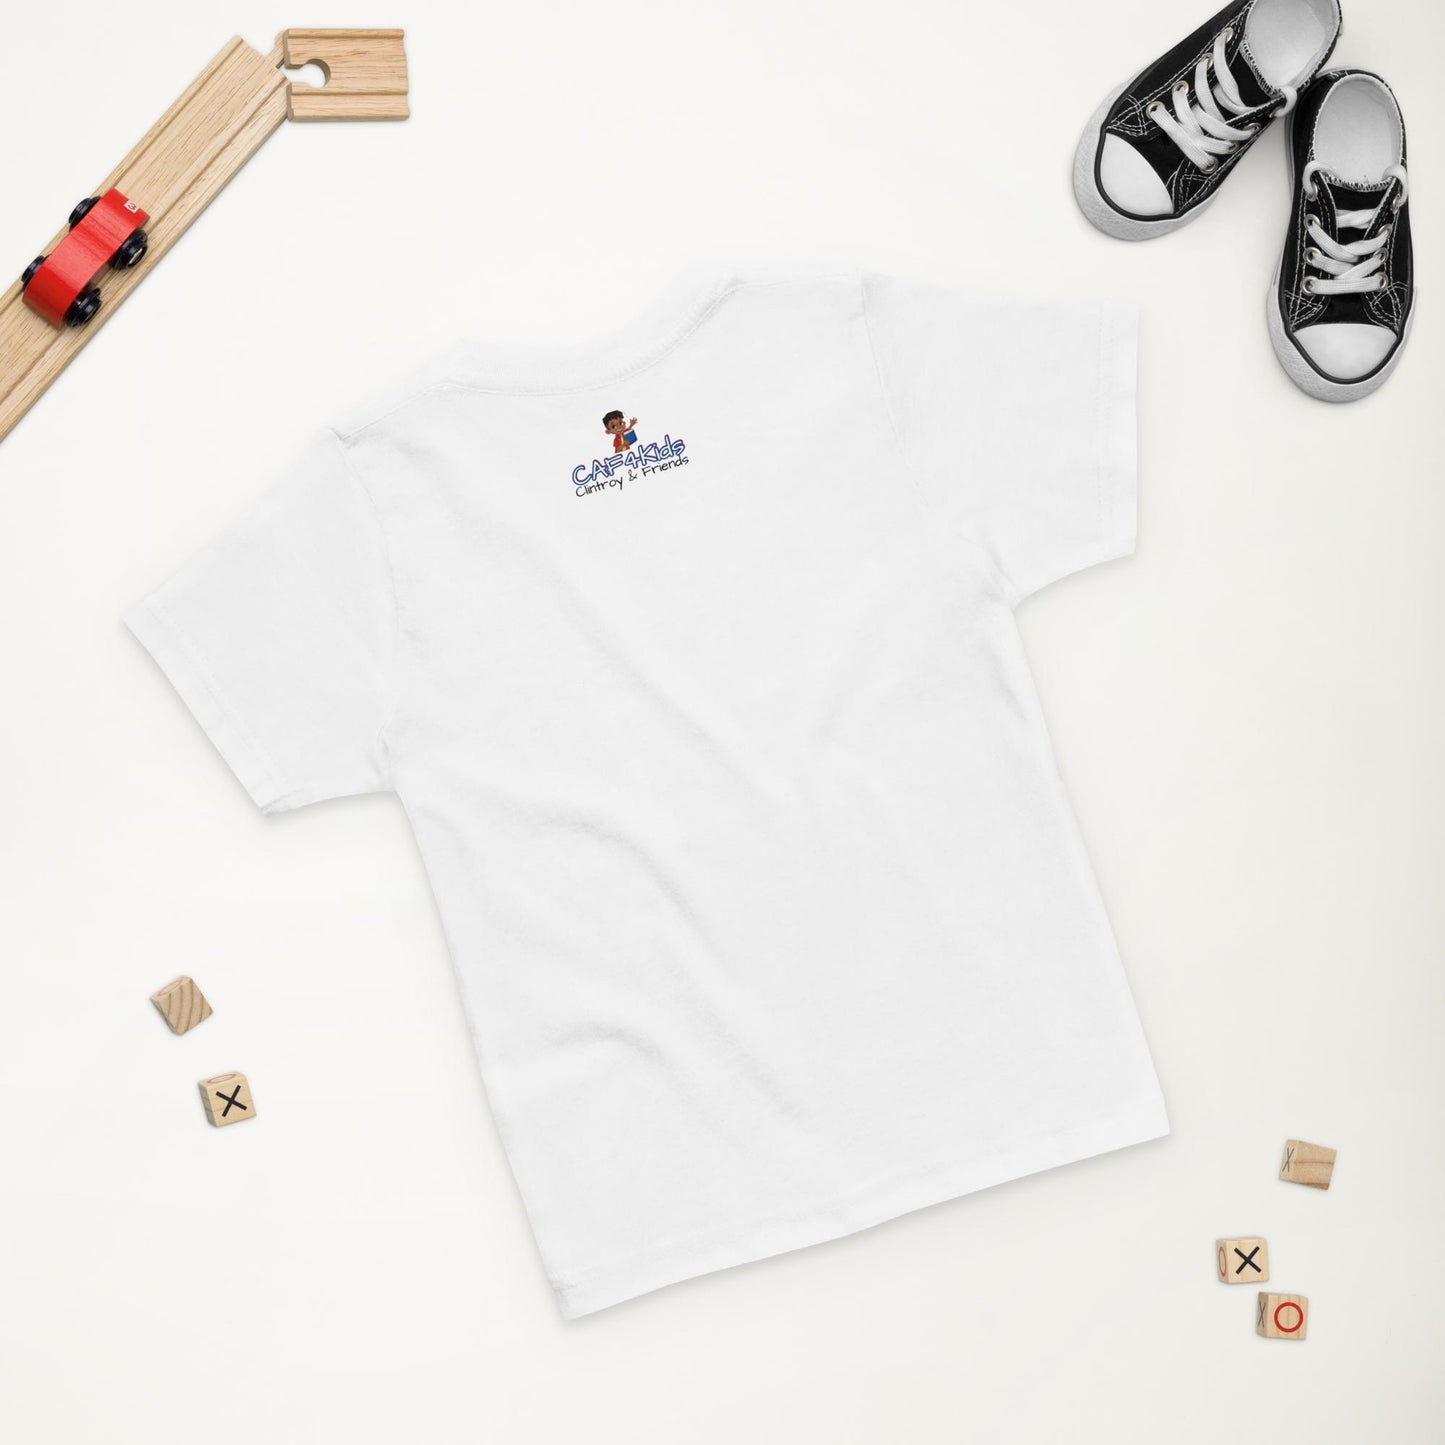 CAF4Kids White Toddler T-shirt - Letter K